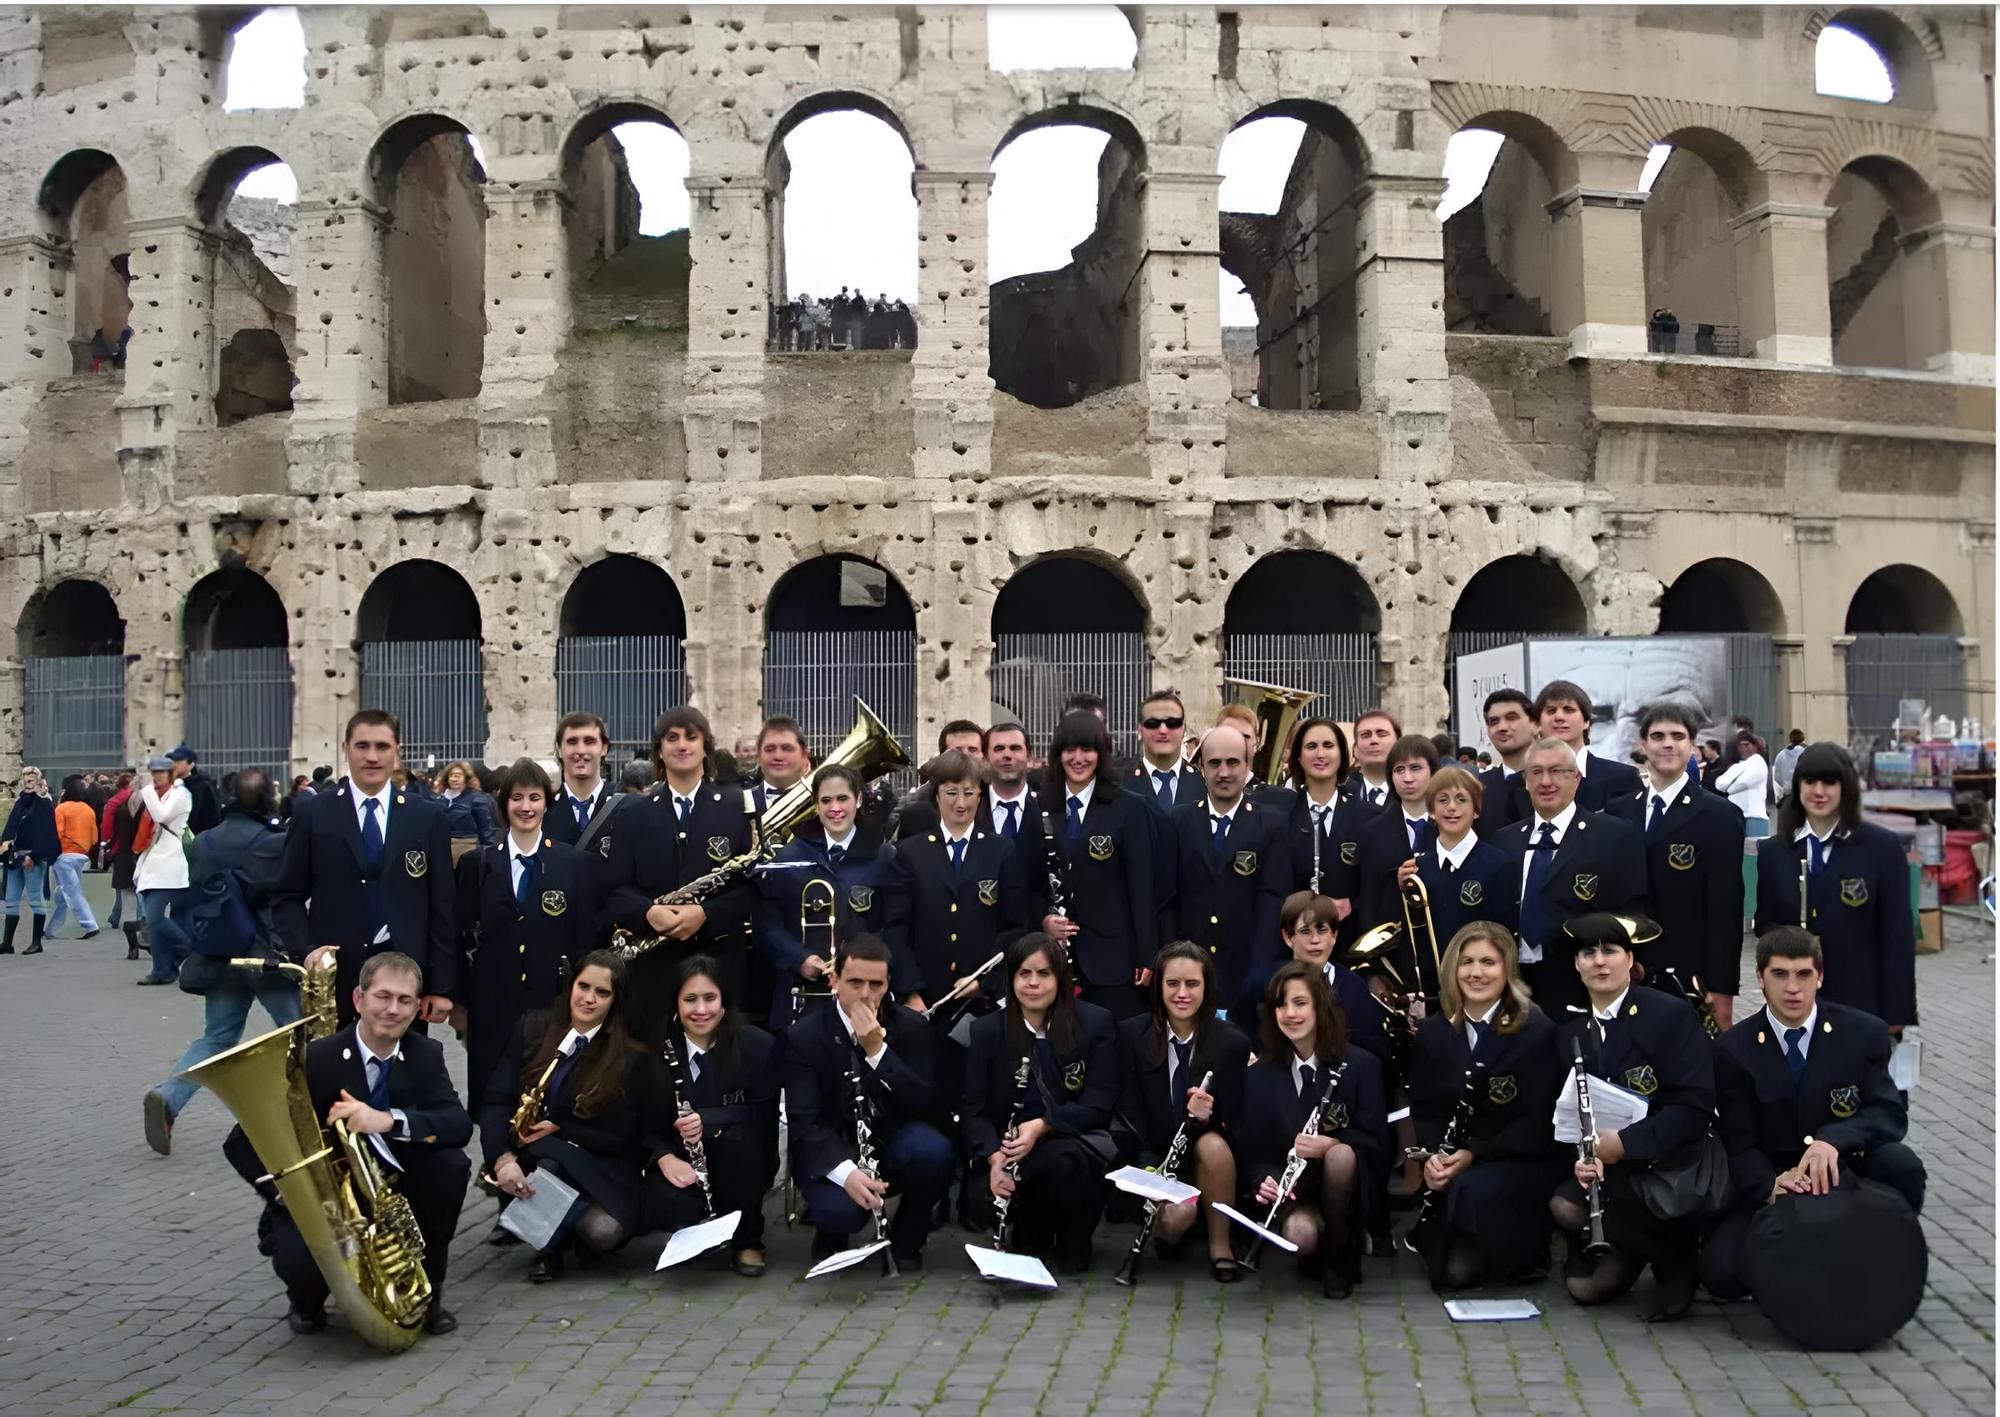 Banda de Música, de España, en el Coliseo de Roma